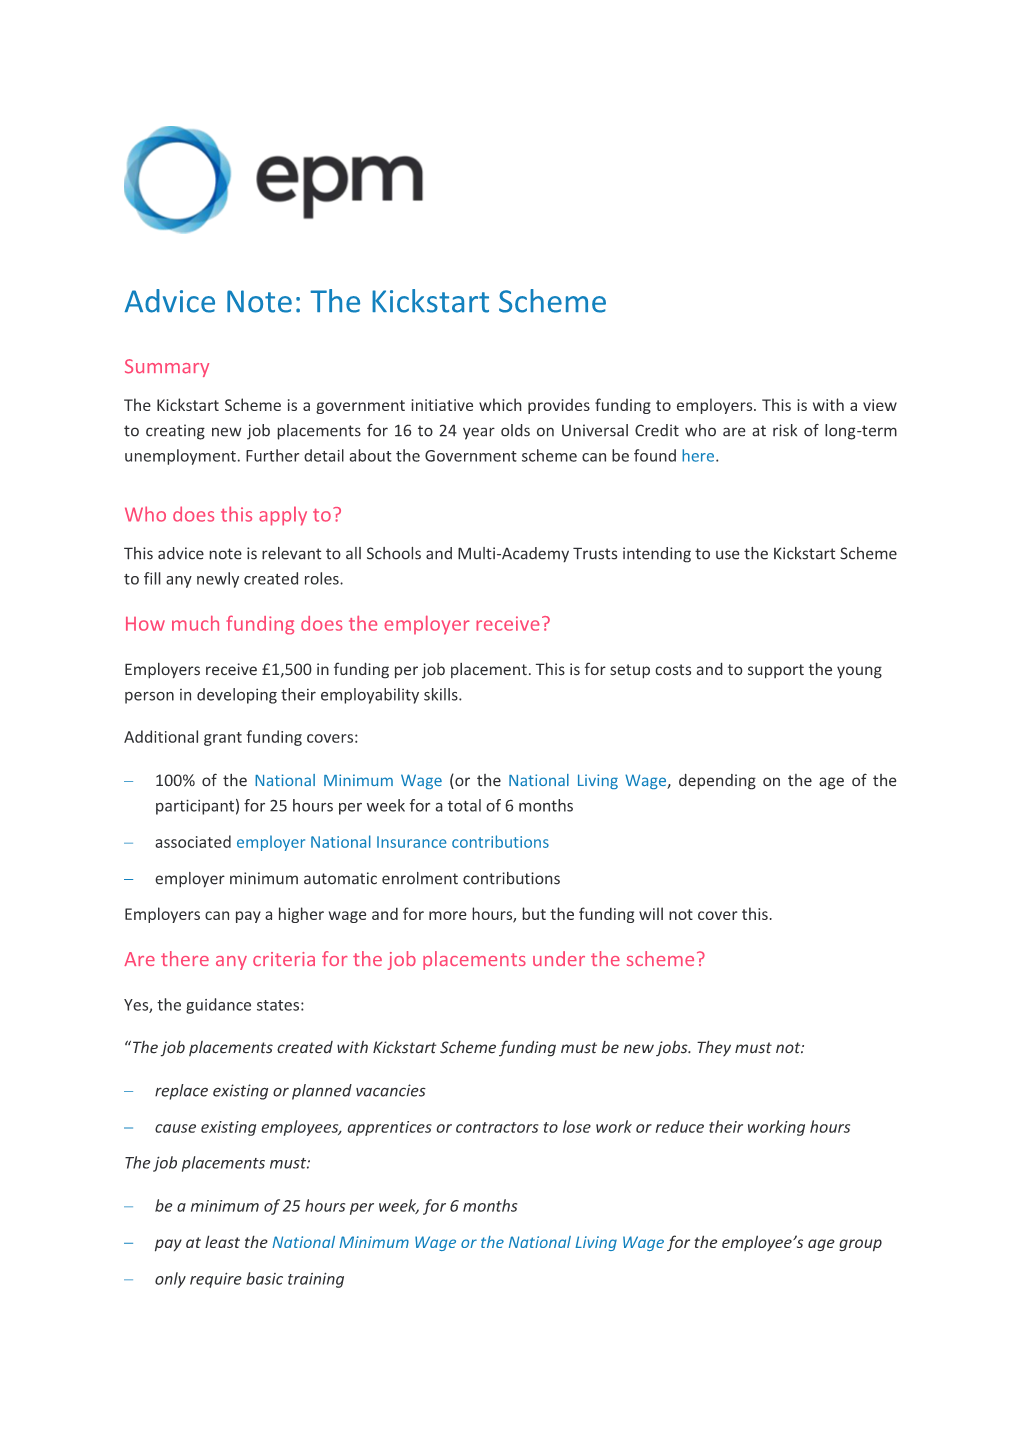 Advice Note: the Kickstart Scheme